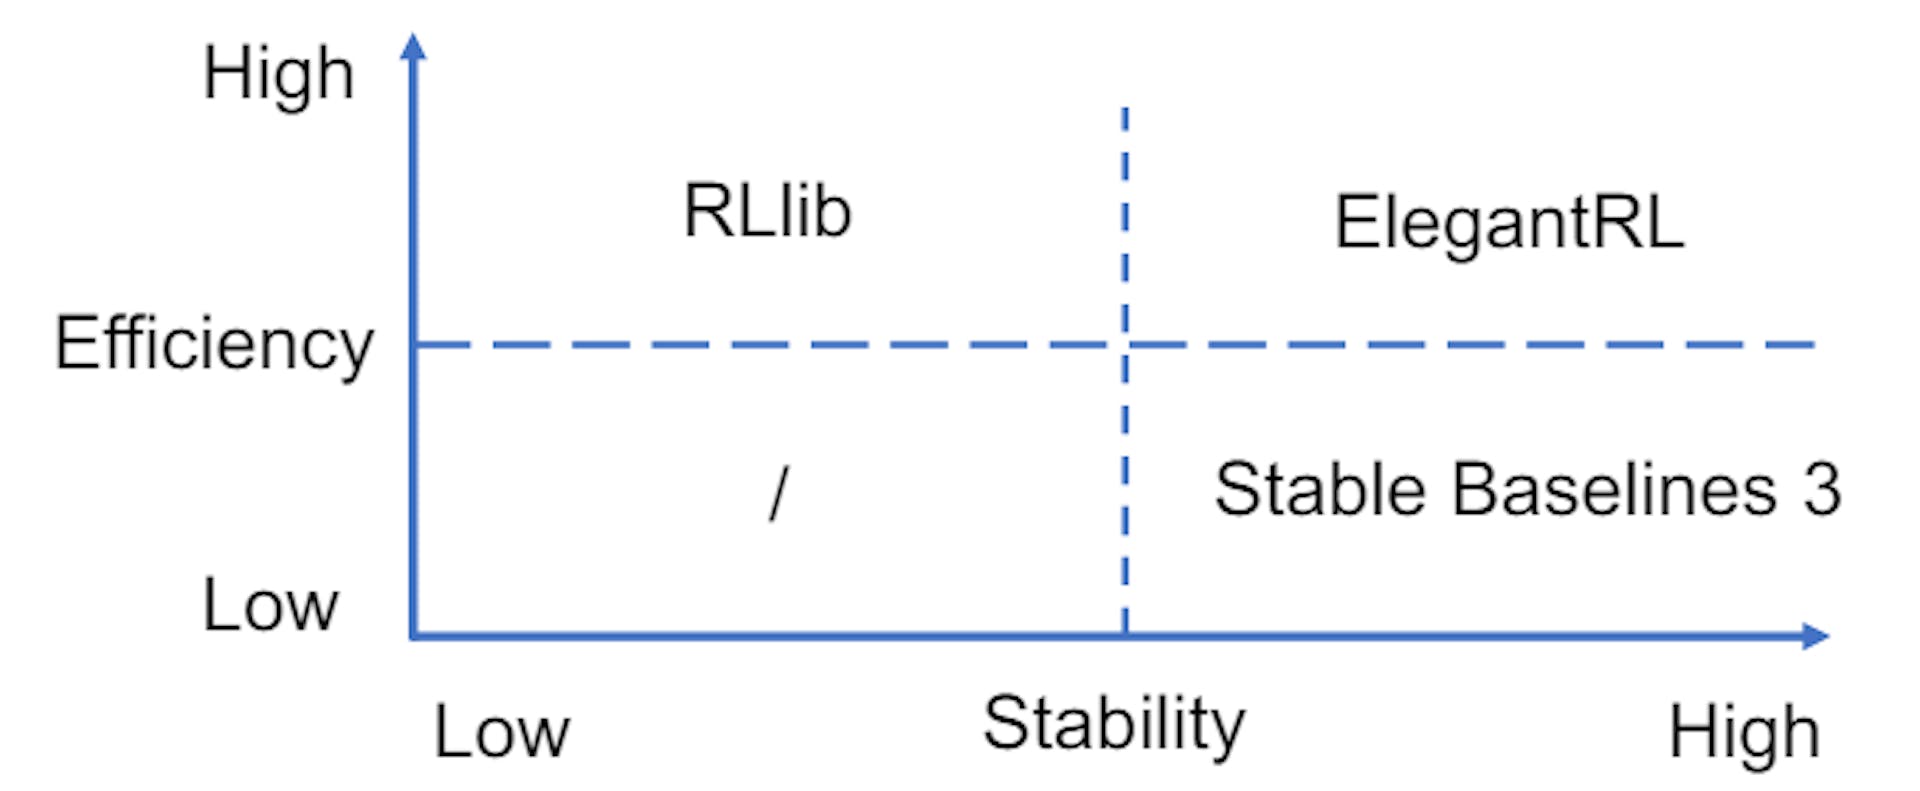 Figure 3: Comparison of DRL libraries.